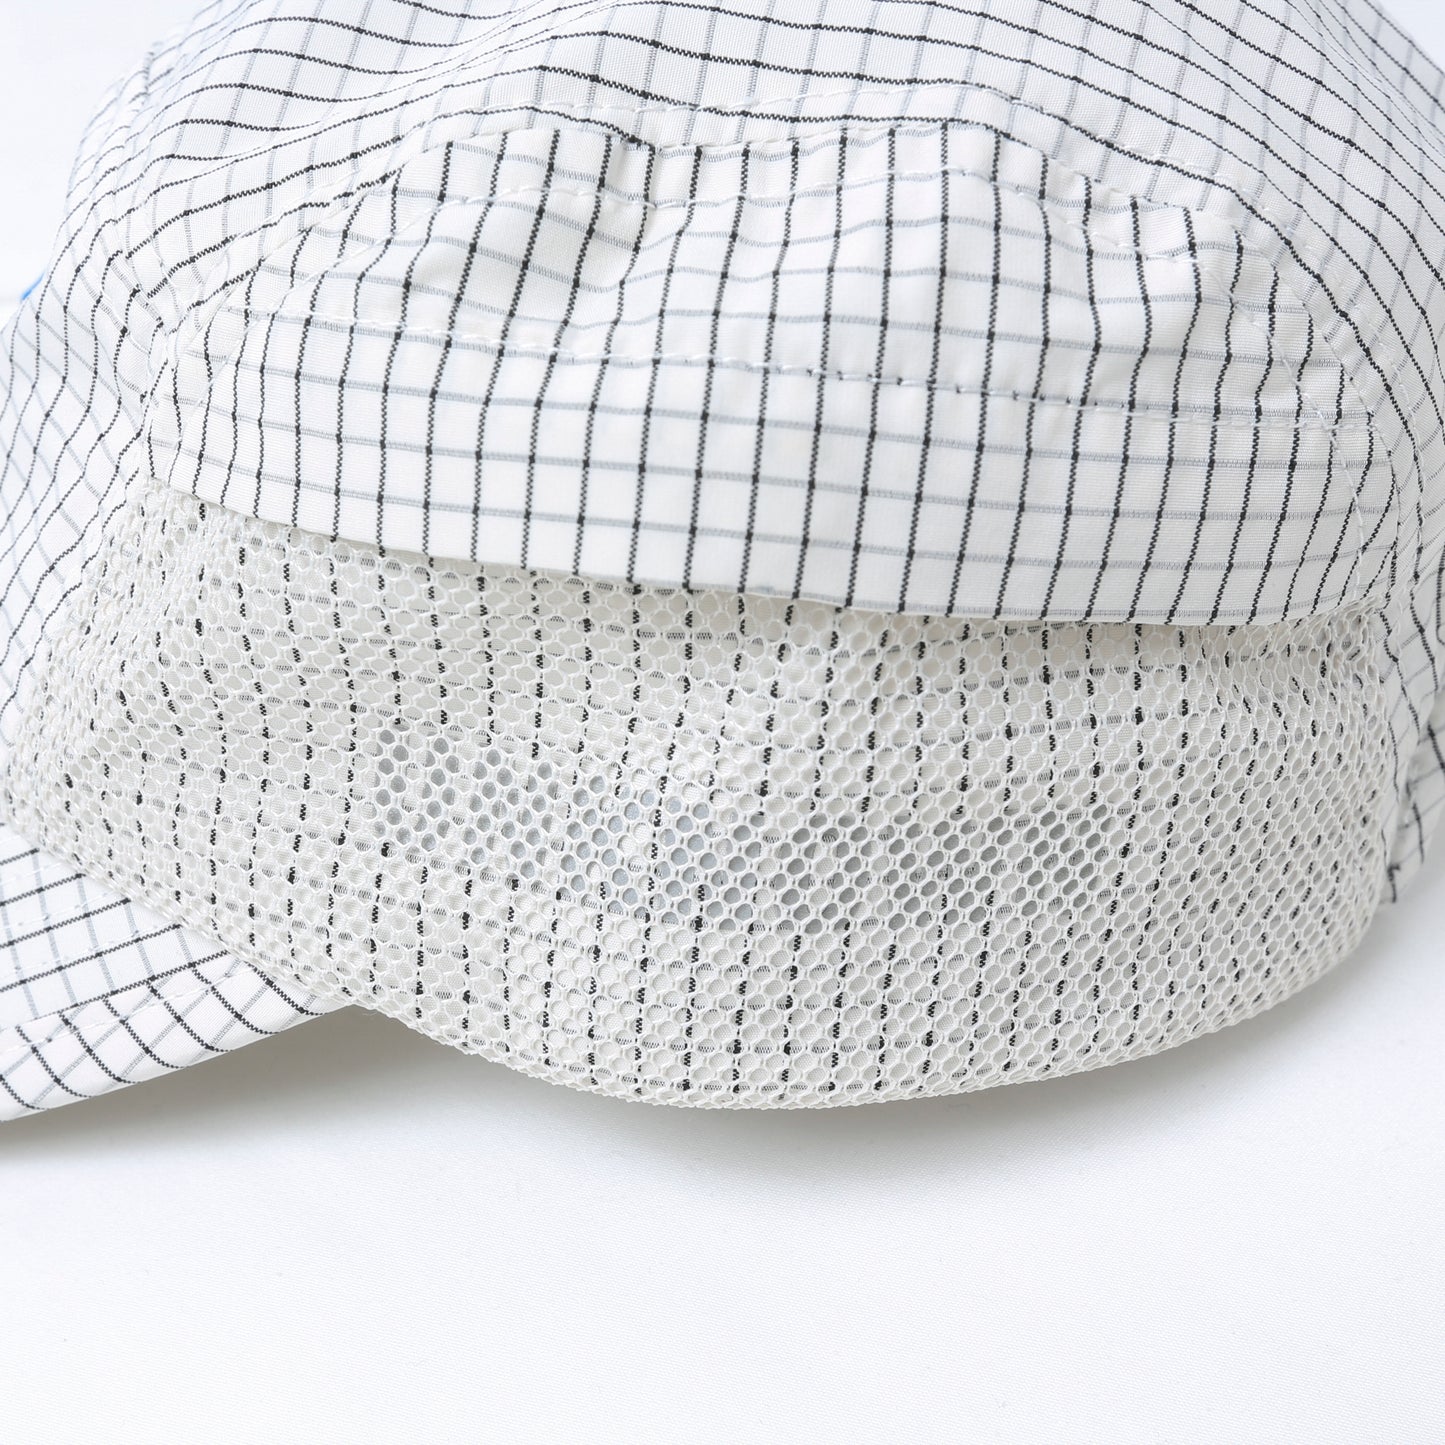 Liberaiders ®(リベレイダース) / GRID CLOTH CAP 70901 WHITE